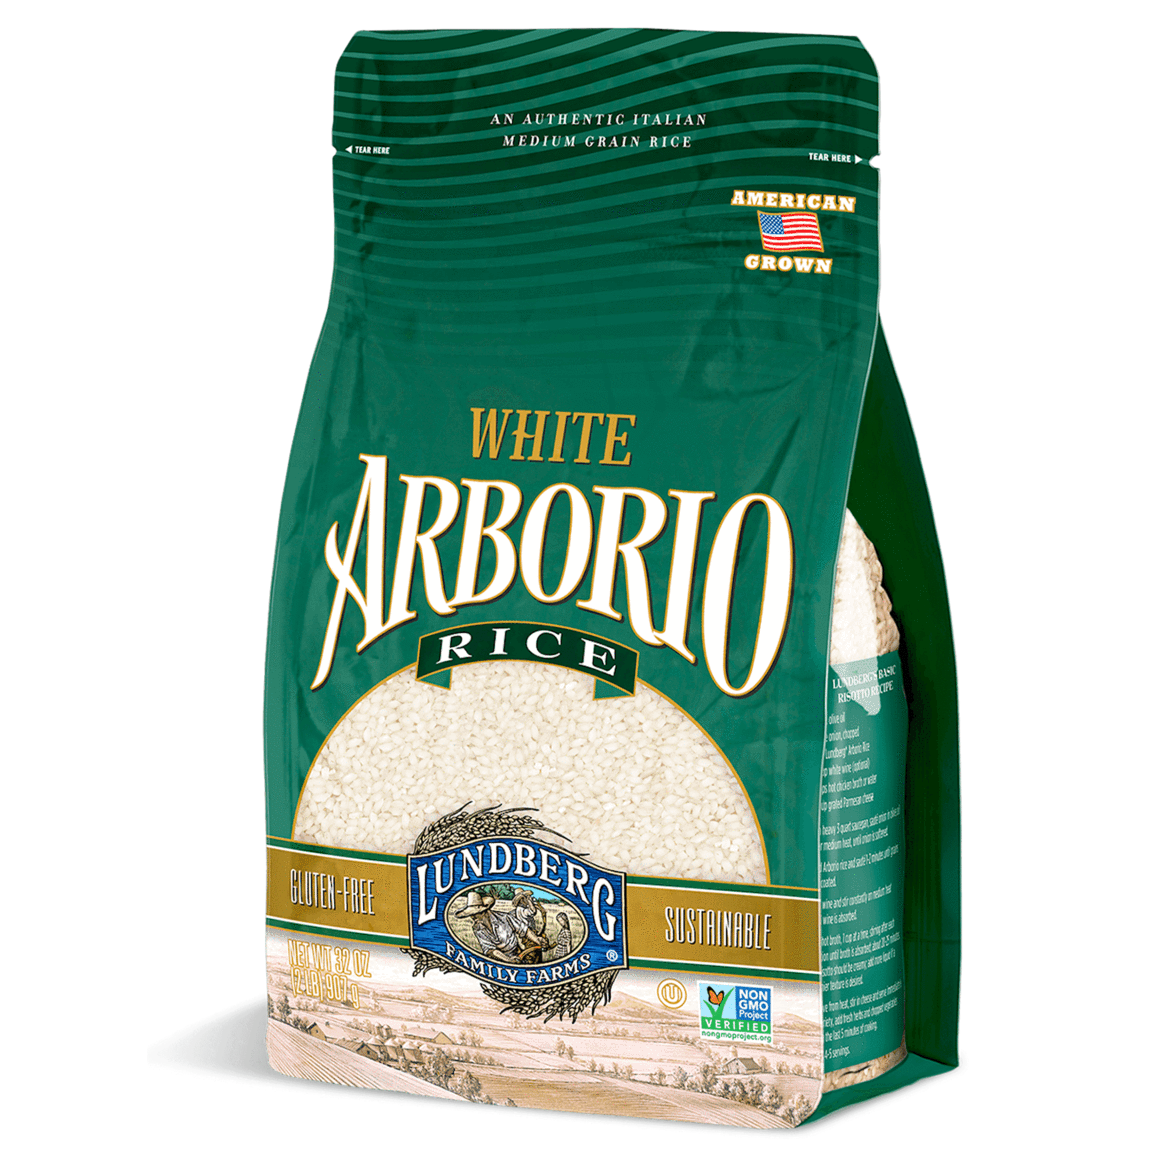 White Arborio Rice by Lundberg 907g